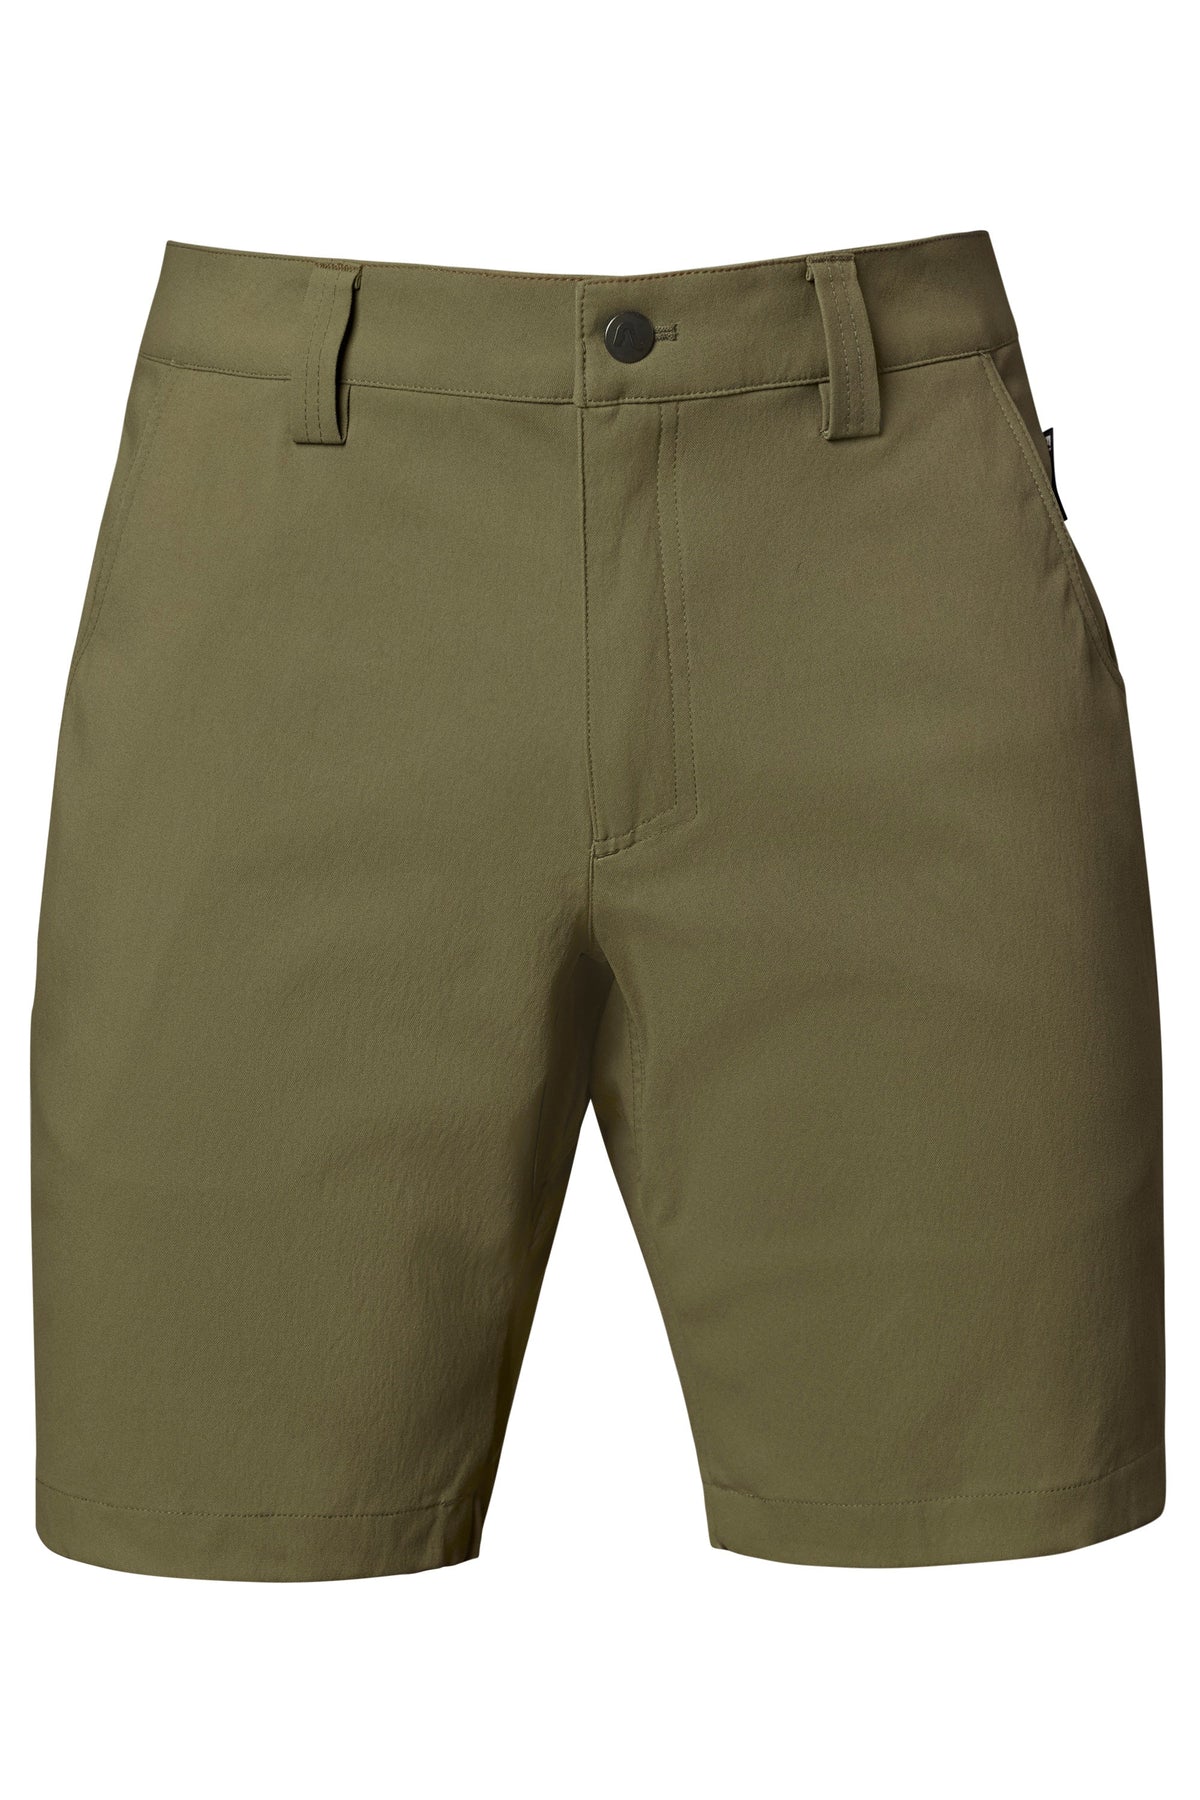 Men's Chino Shorts and Hybrid Shorts, Men's Shorts